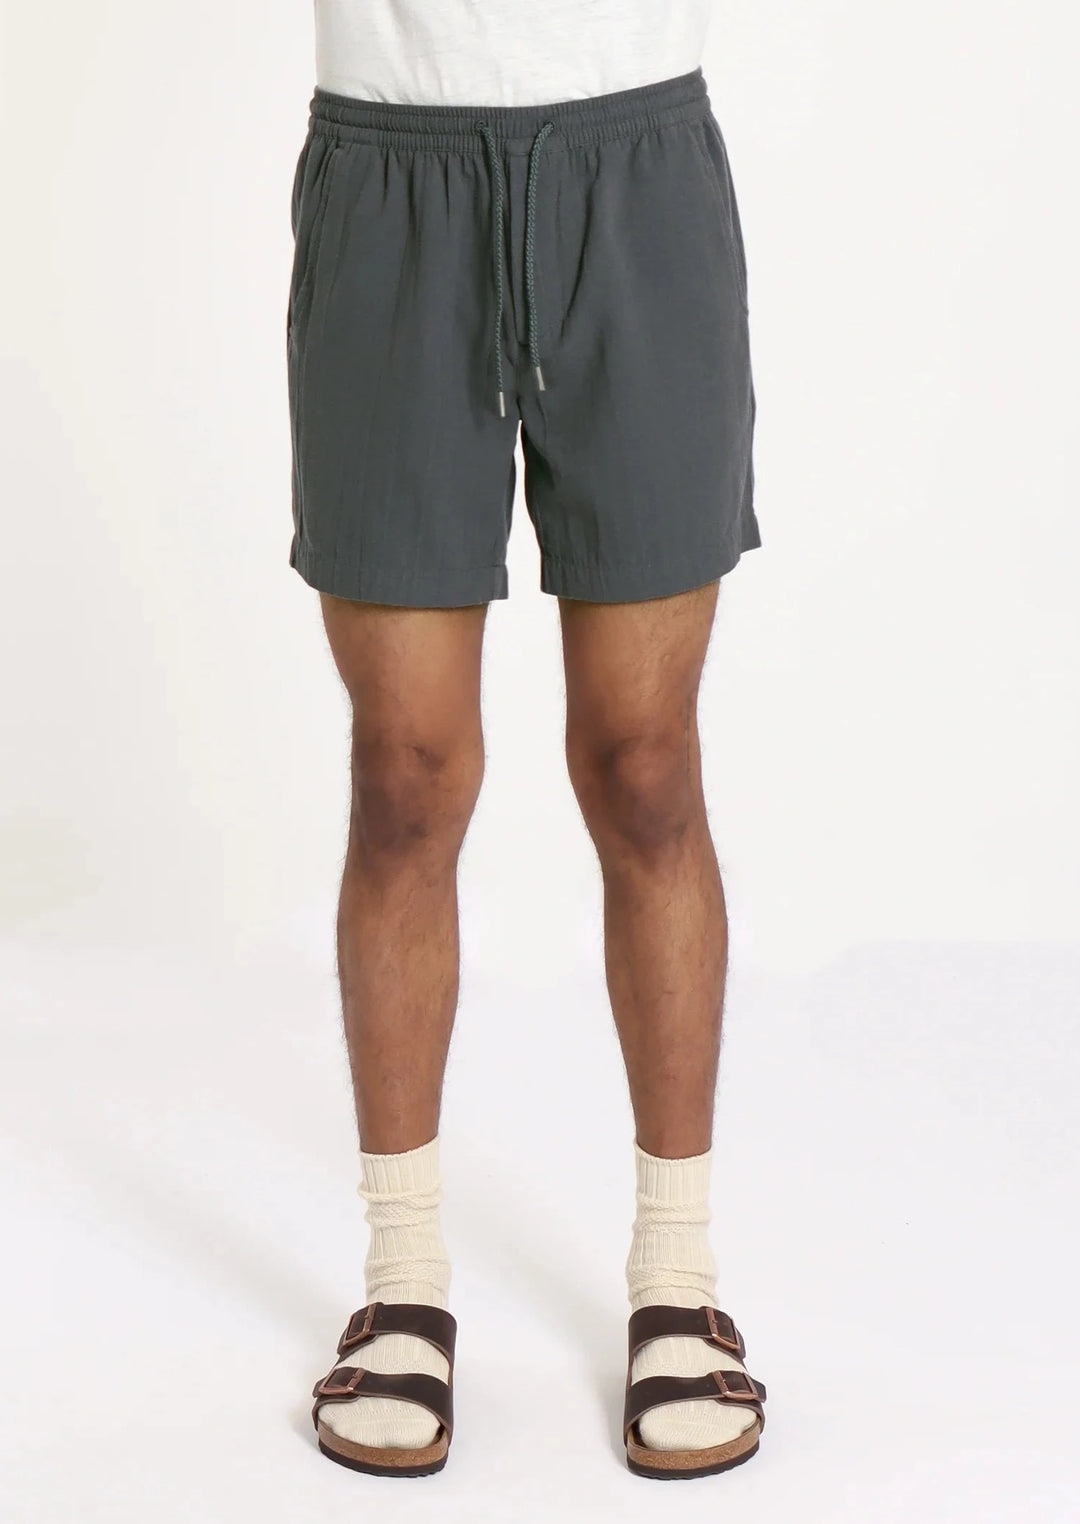 Navy seersucker shorts on man wearing socks and birkenstocks